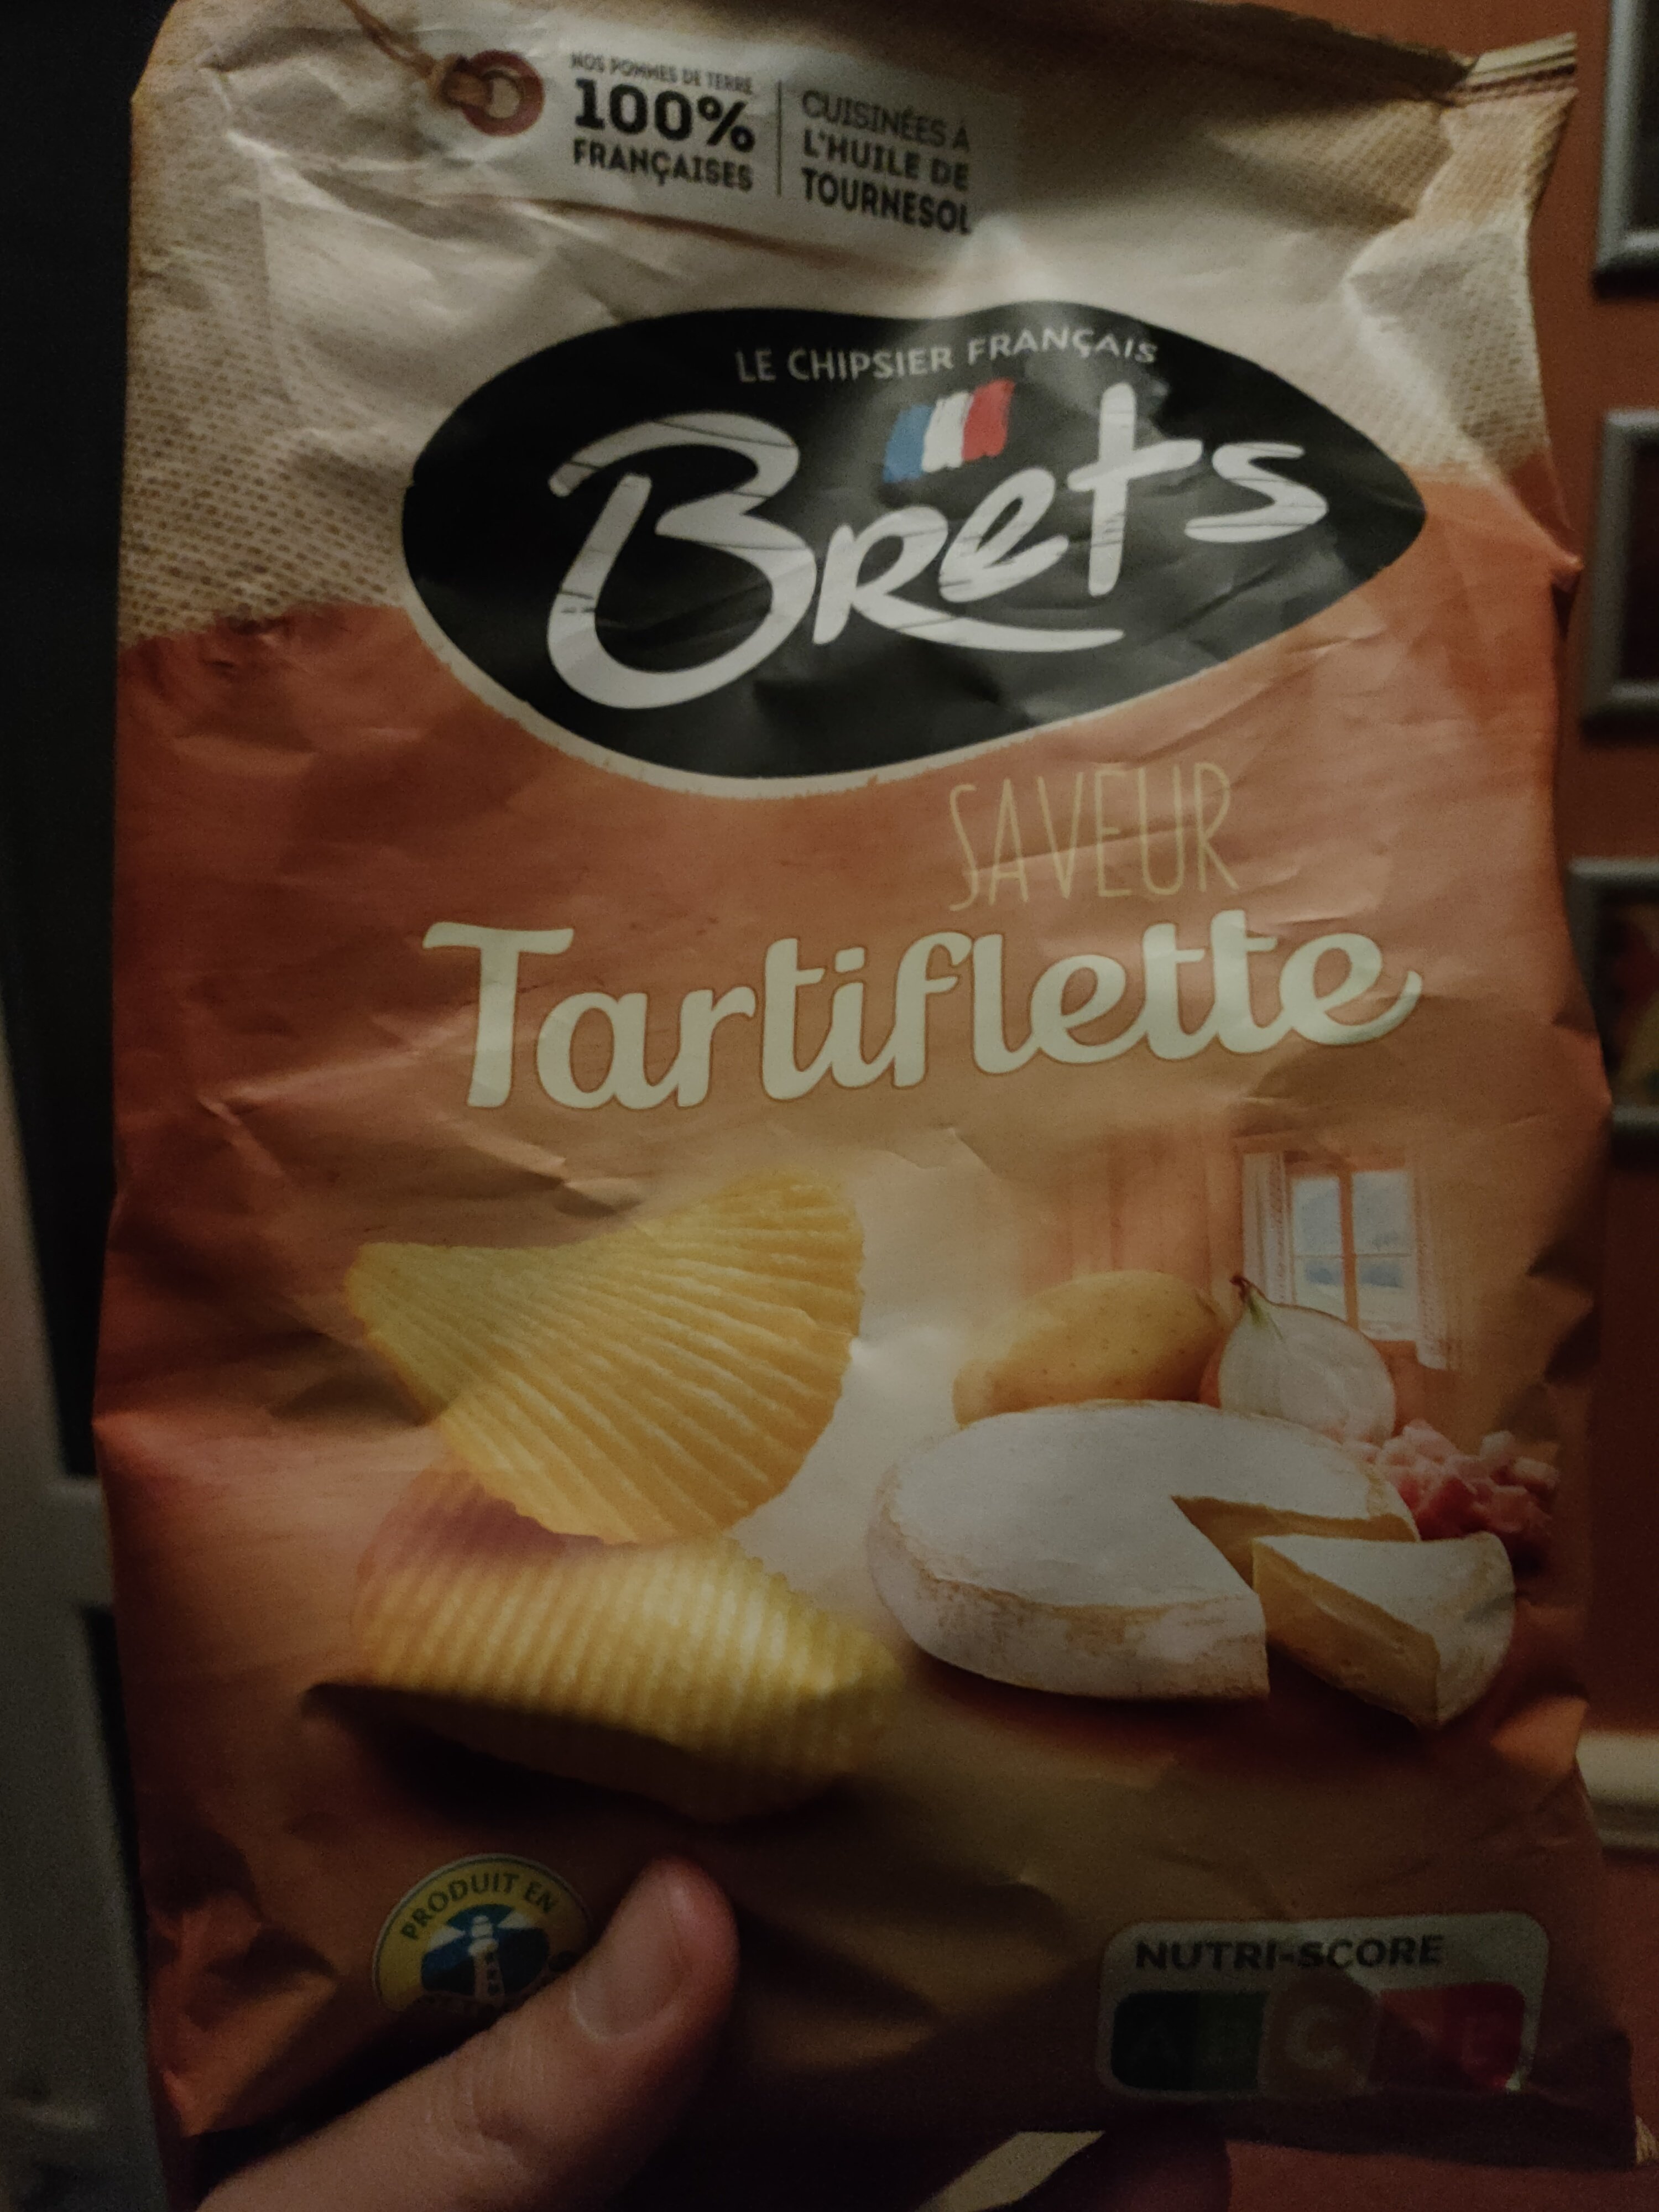 Brets - Tartiflette Potato Chips, 125g (4.4oz) Bag